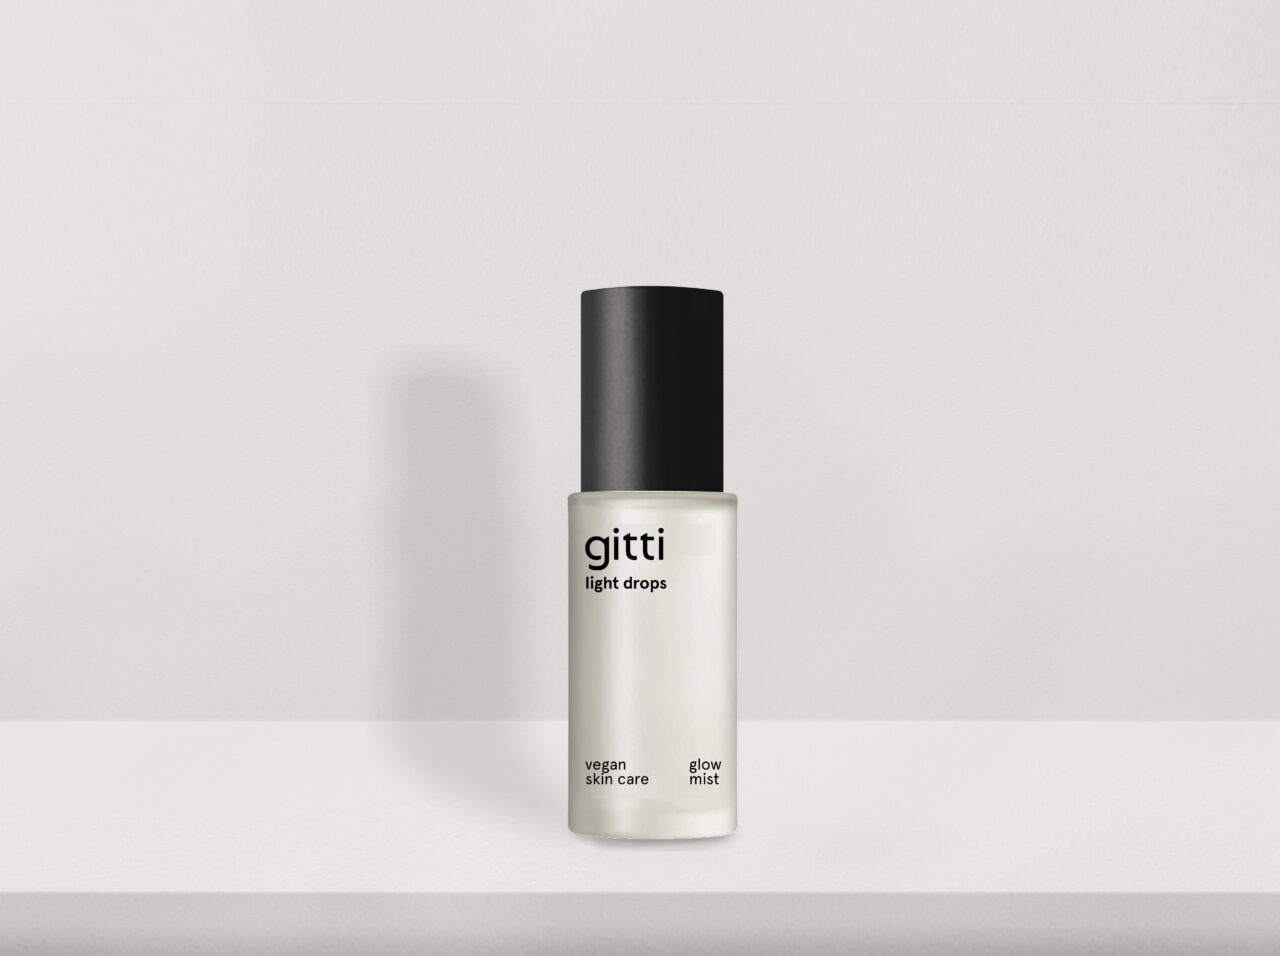 Gitti – Packaging proposals (unused)